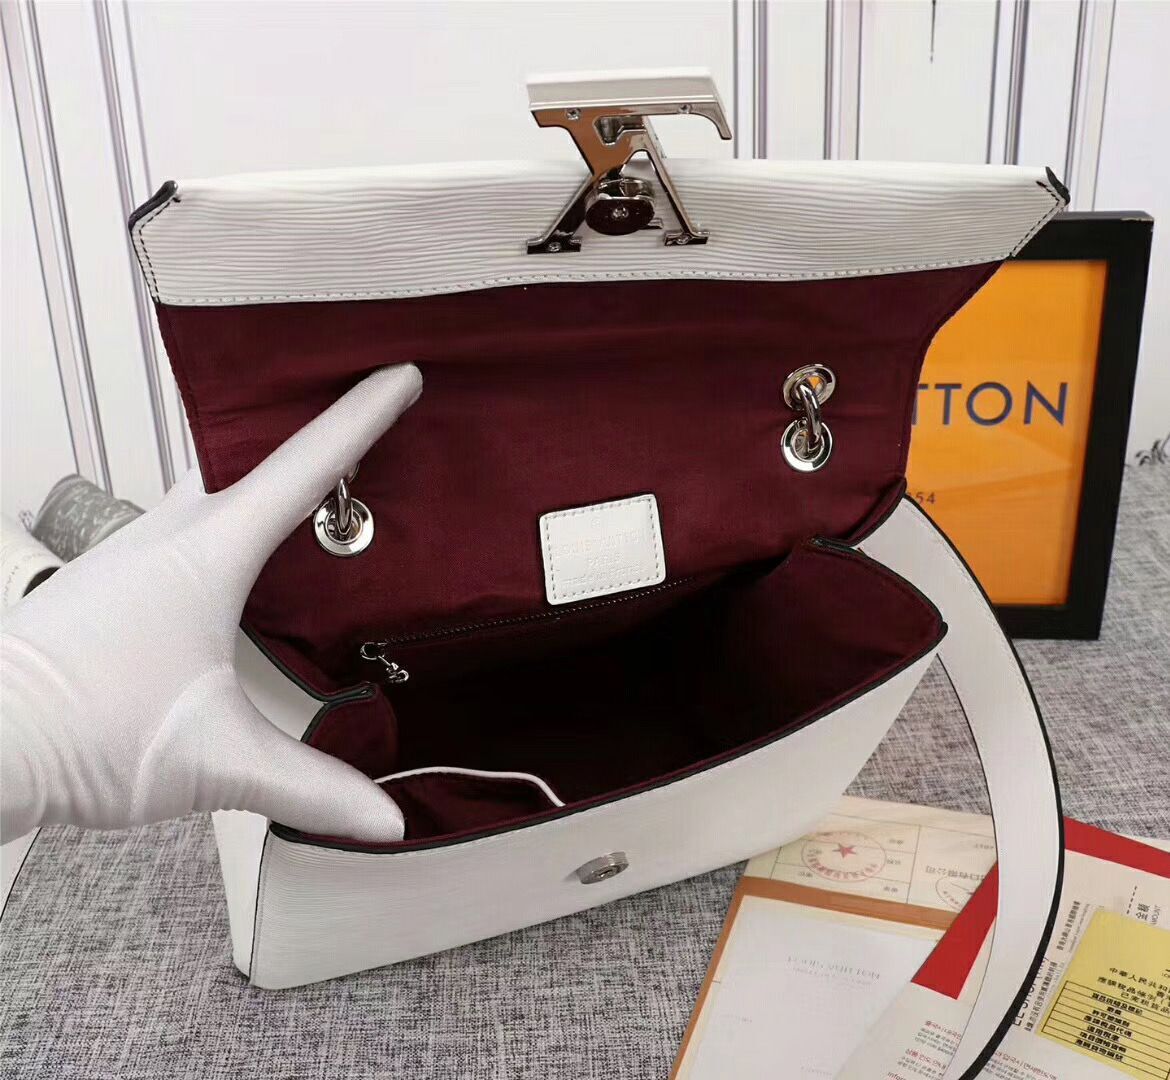 Louis Vuitton Original Epi Leather Grenelle Small Tote Bag M53694 White